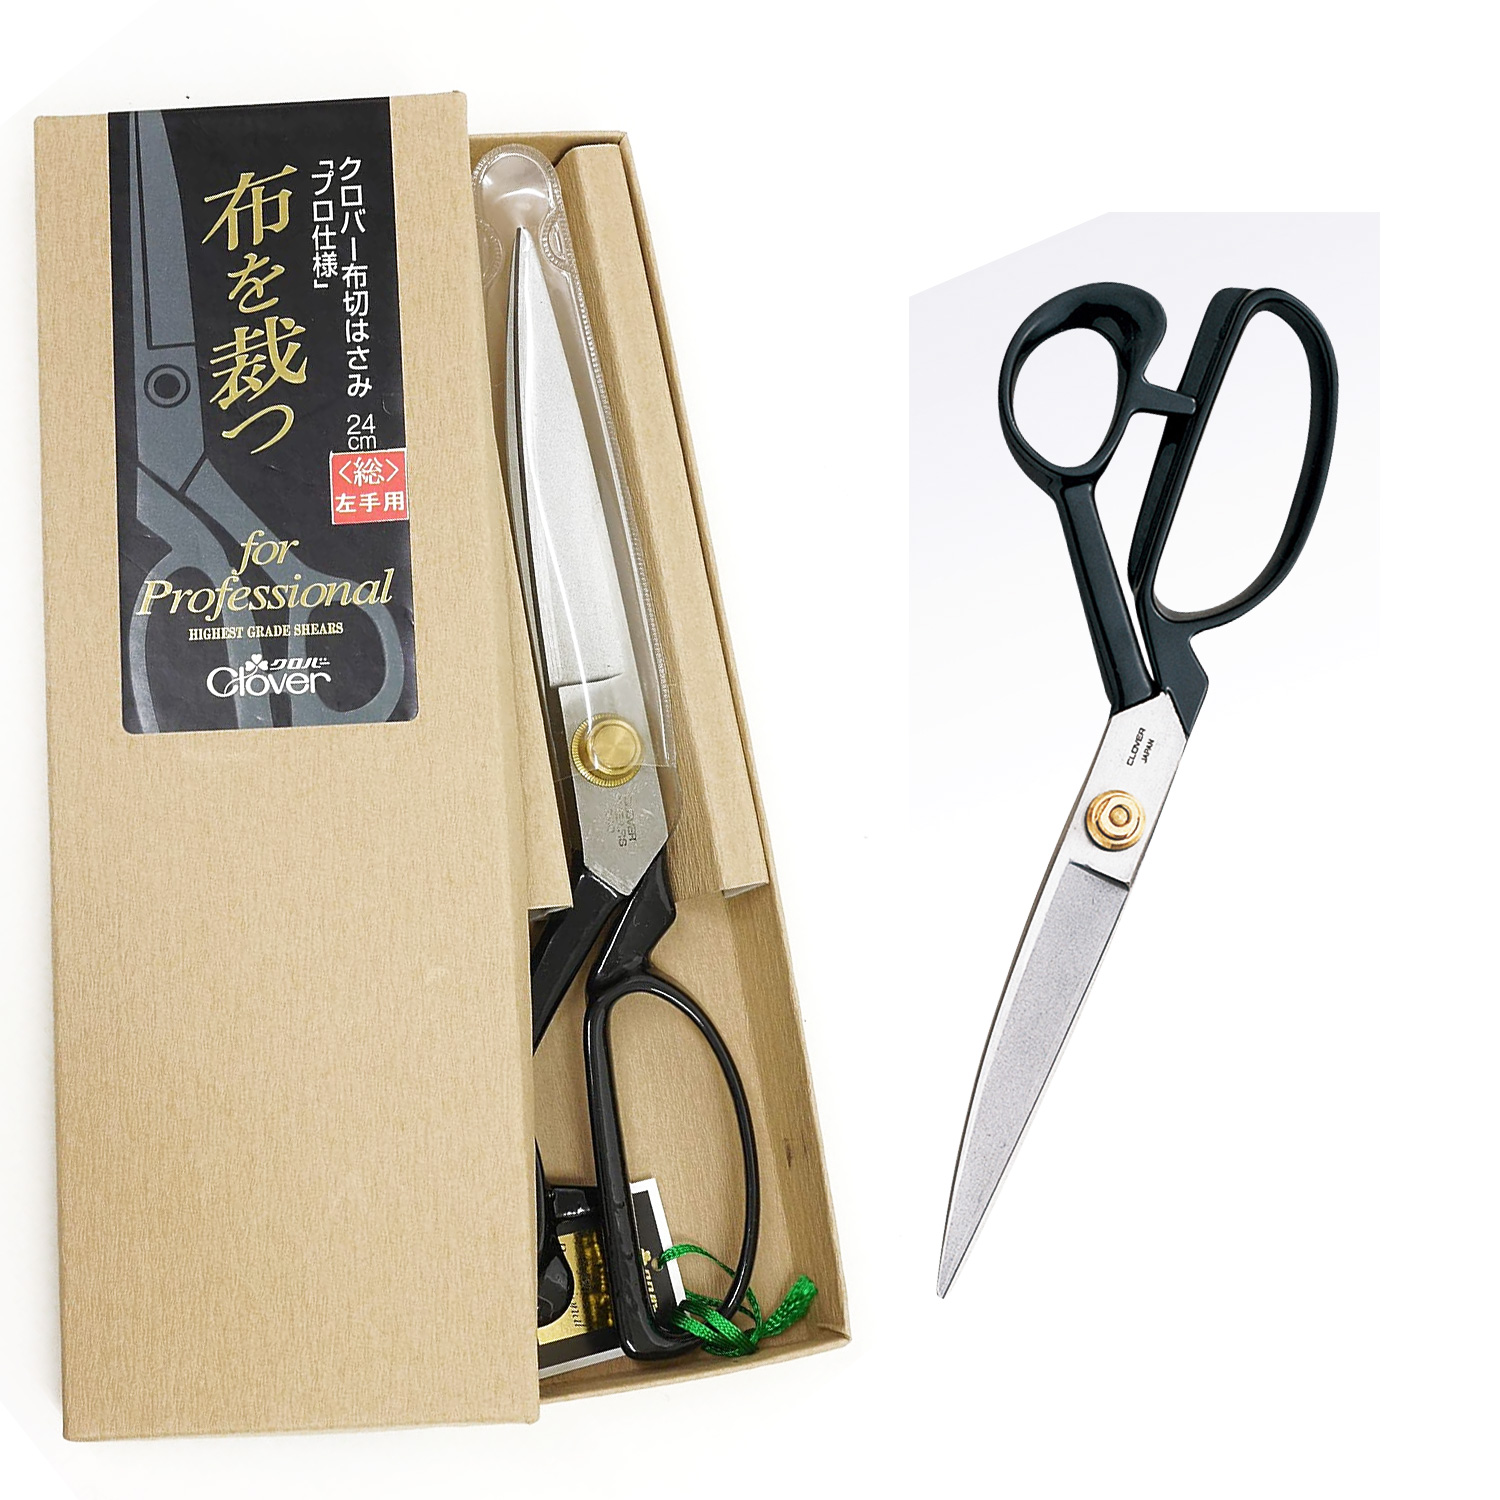 CL36-164 Clover Fabric Scissors [Professional Use] Left Hand Scissors 24cm (pcs)